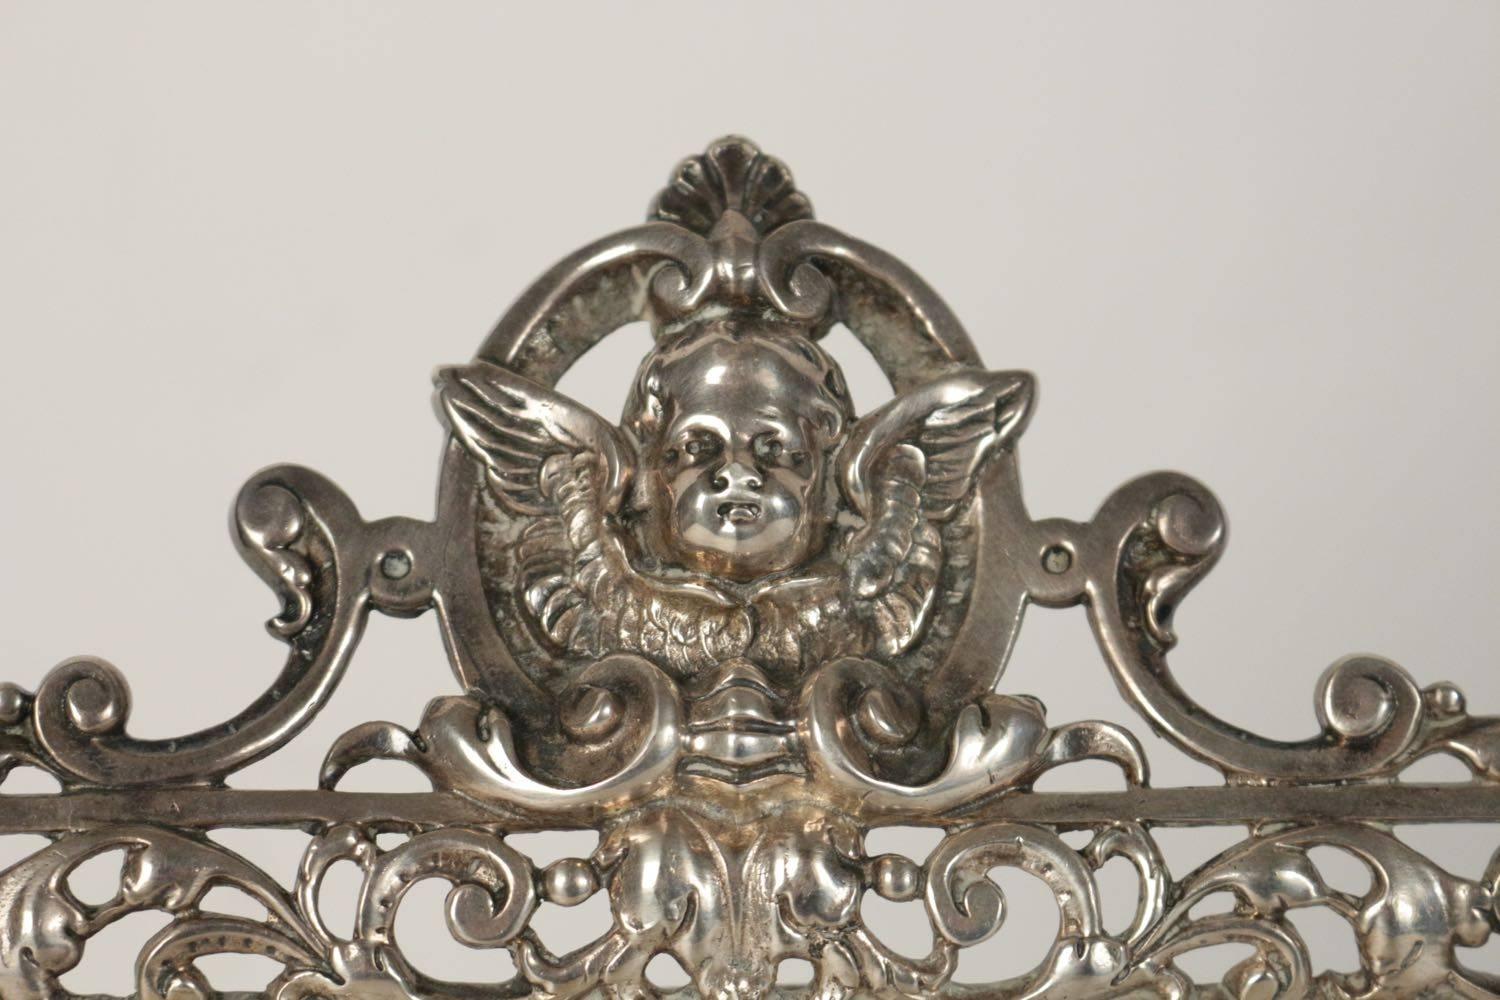 Napoleon III Standing Vanity Mirror in Silvered Bronze from the 19th Century